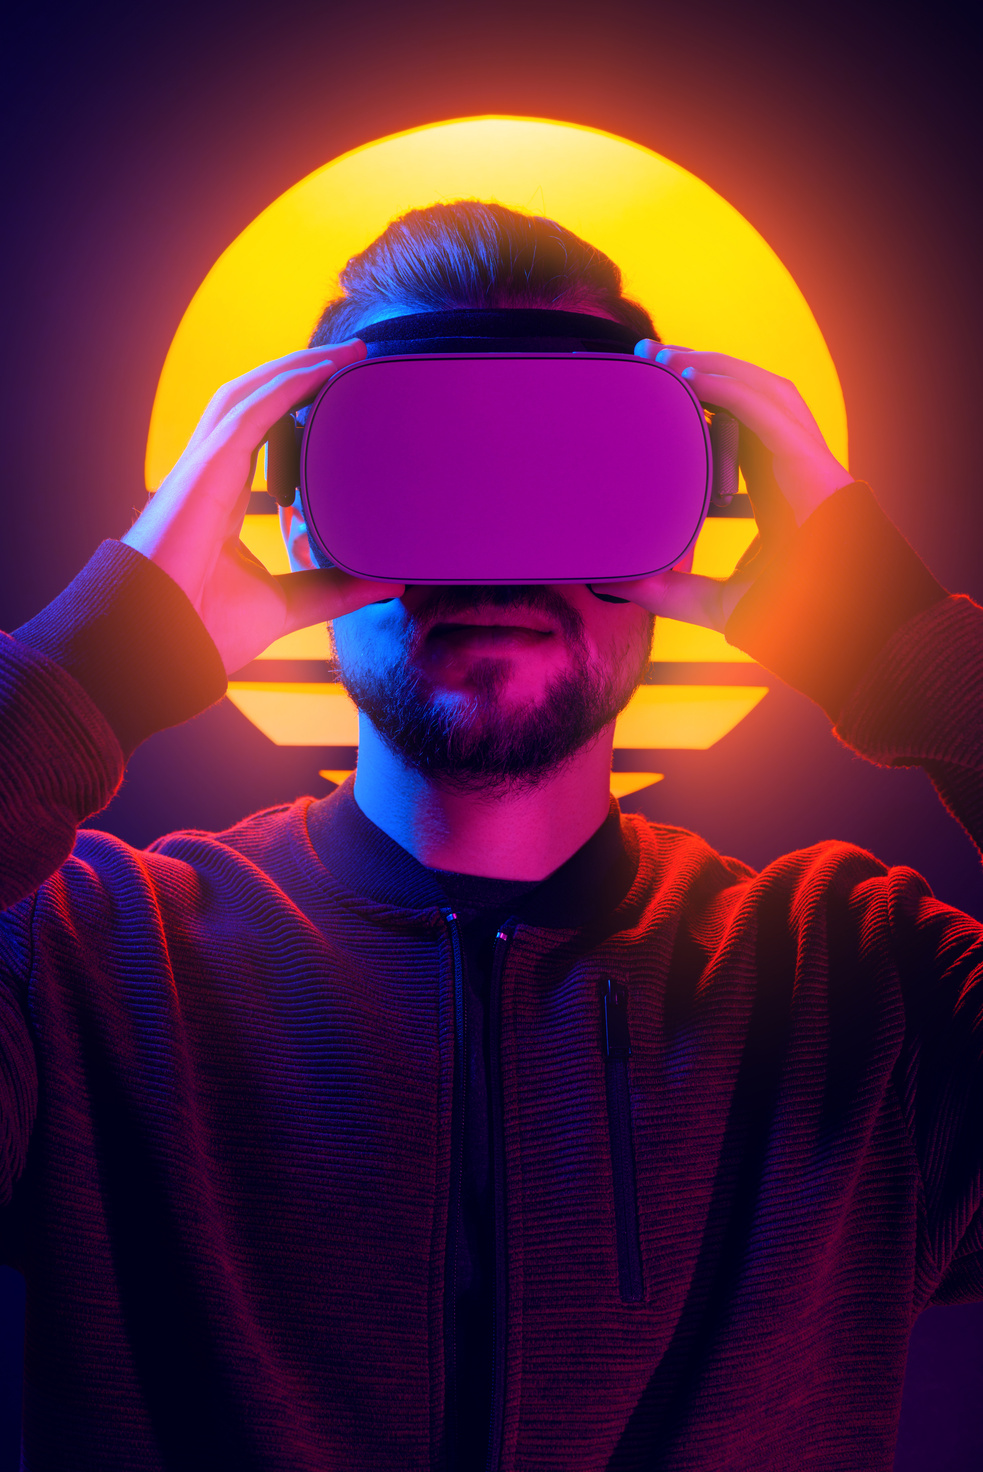 VR videogame experience portrait